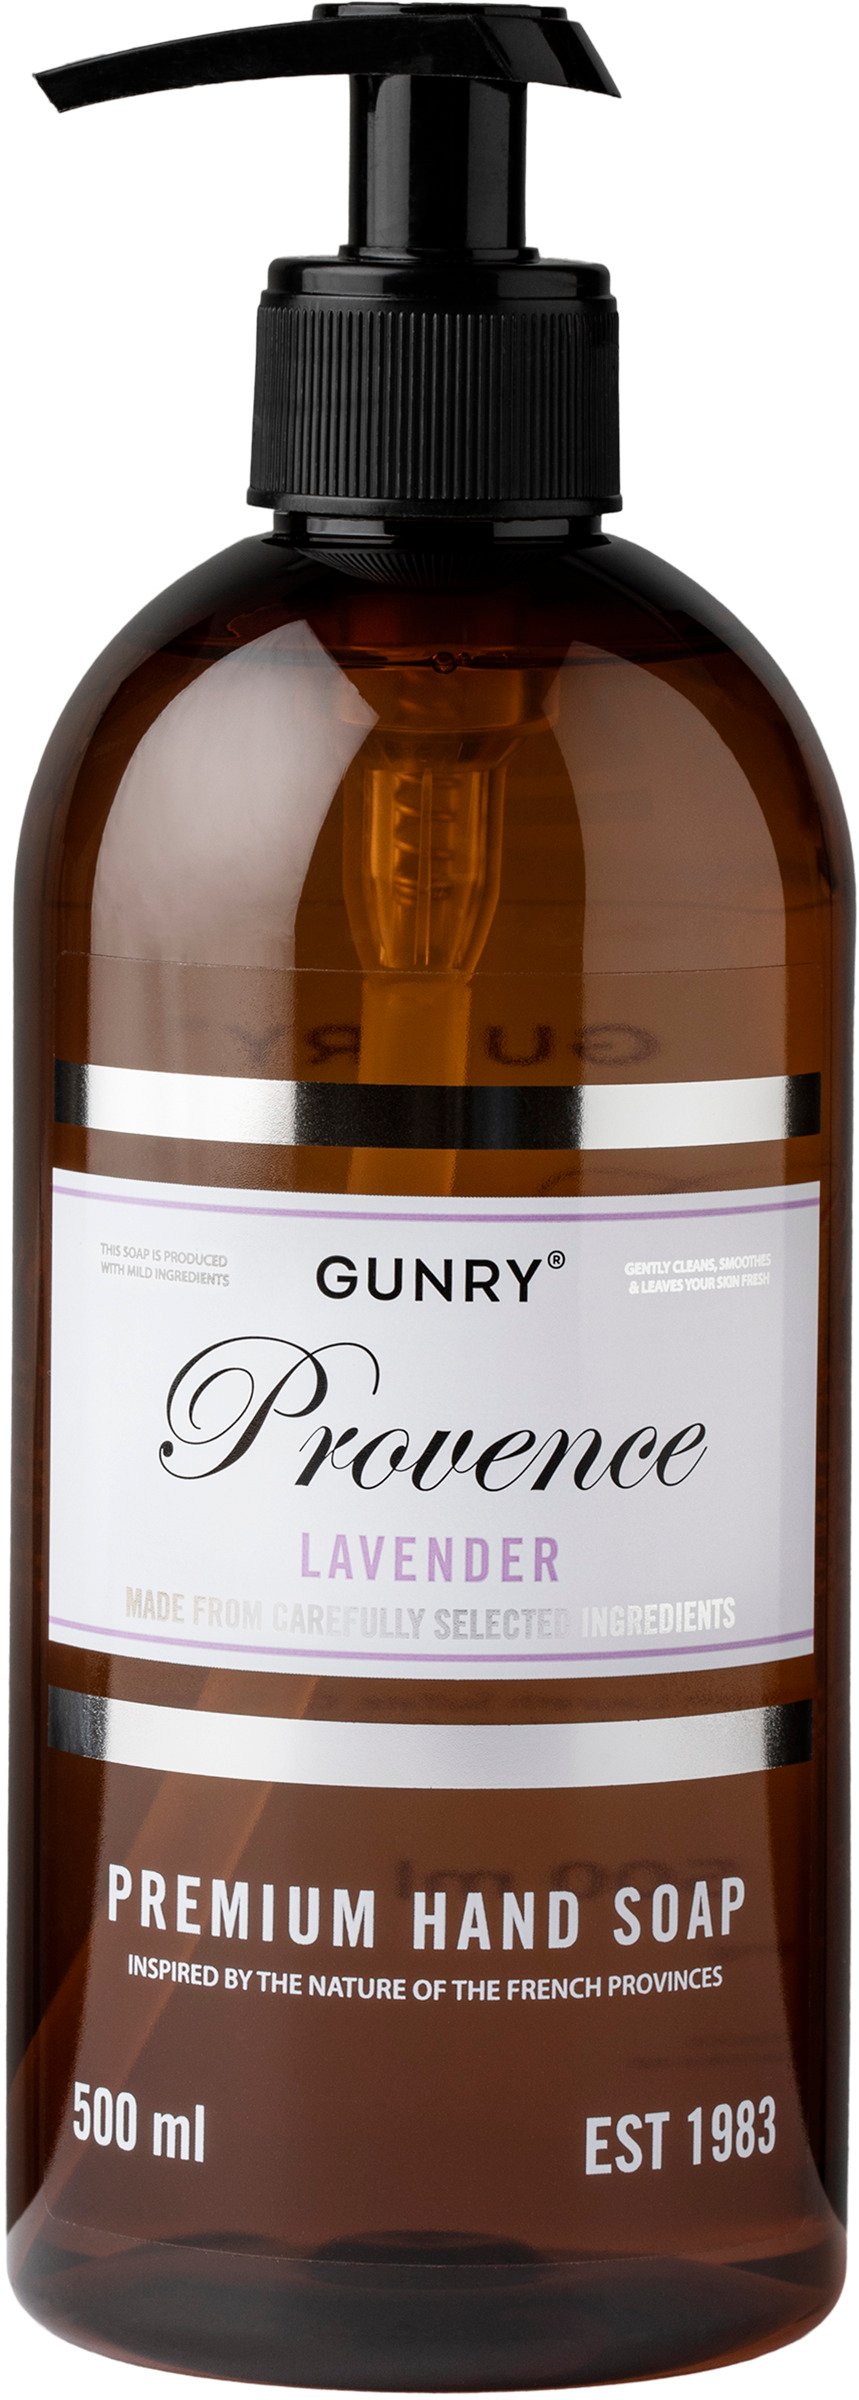 Gunry Provence Lavender Hand Soap 500 ml